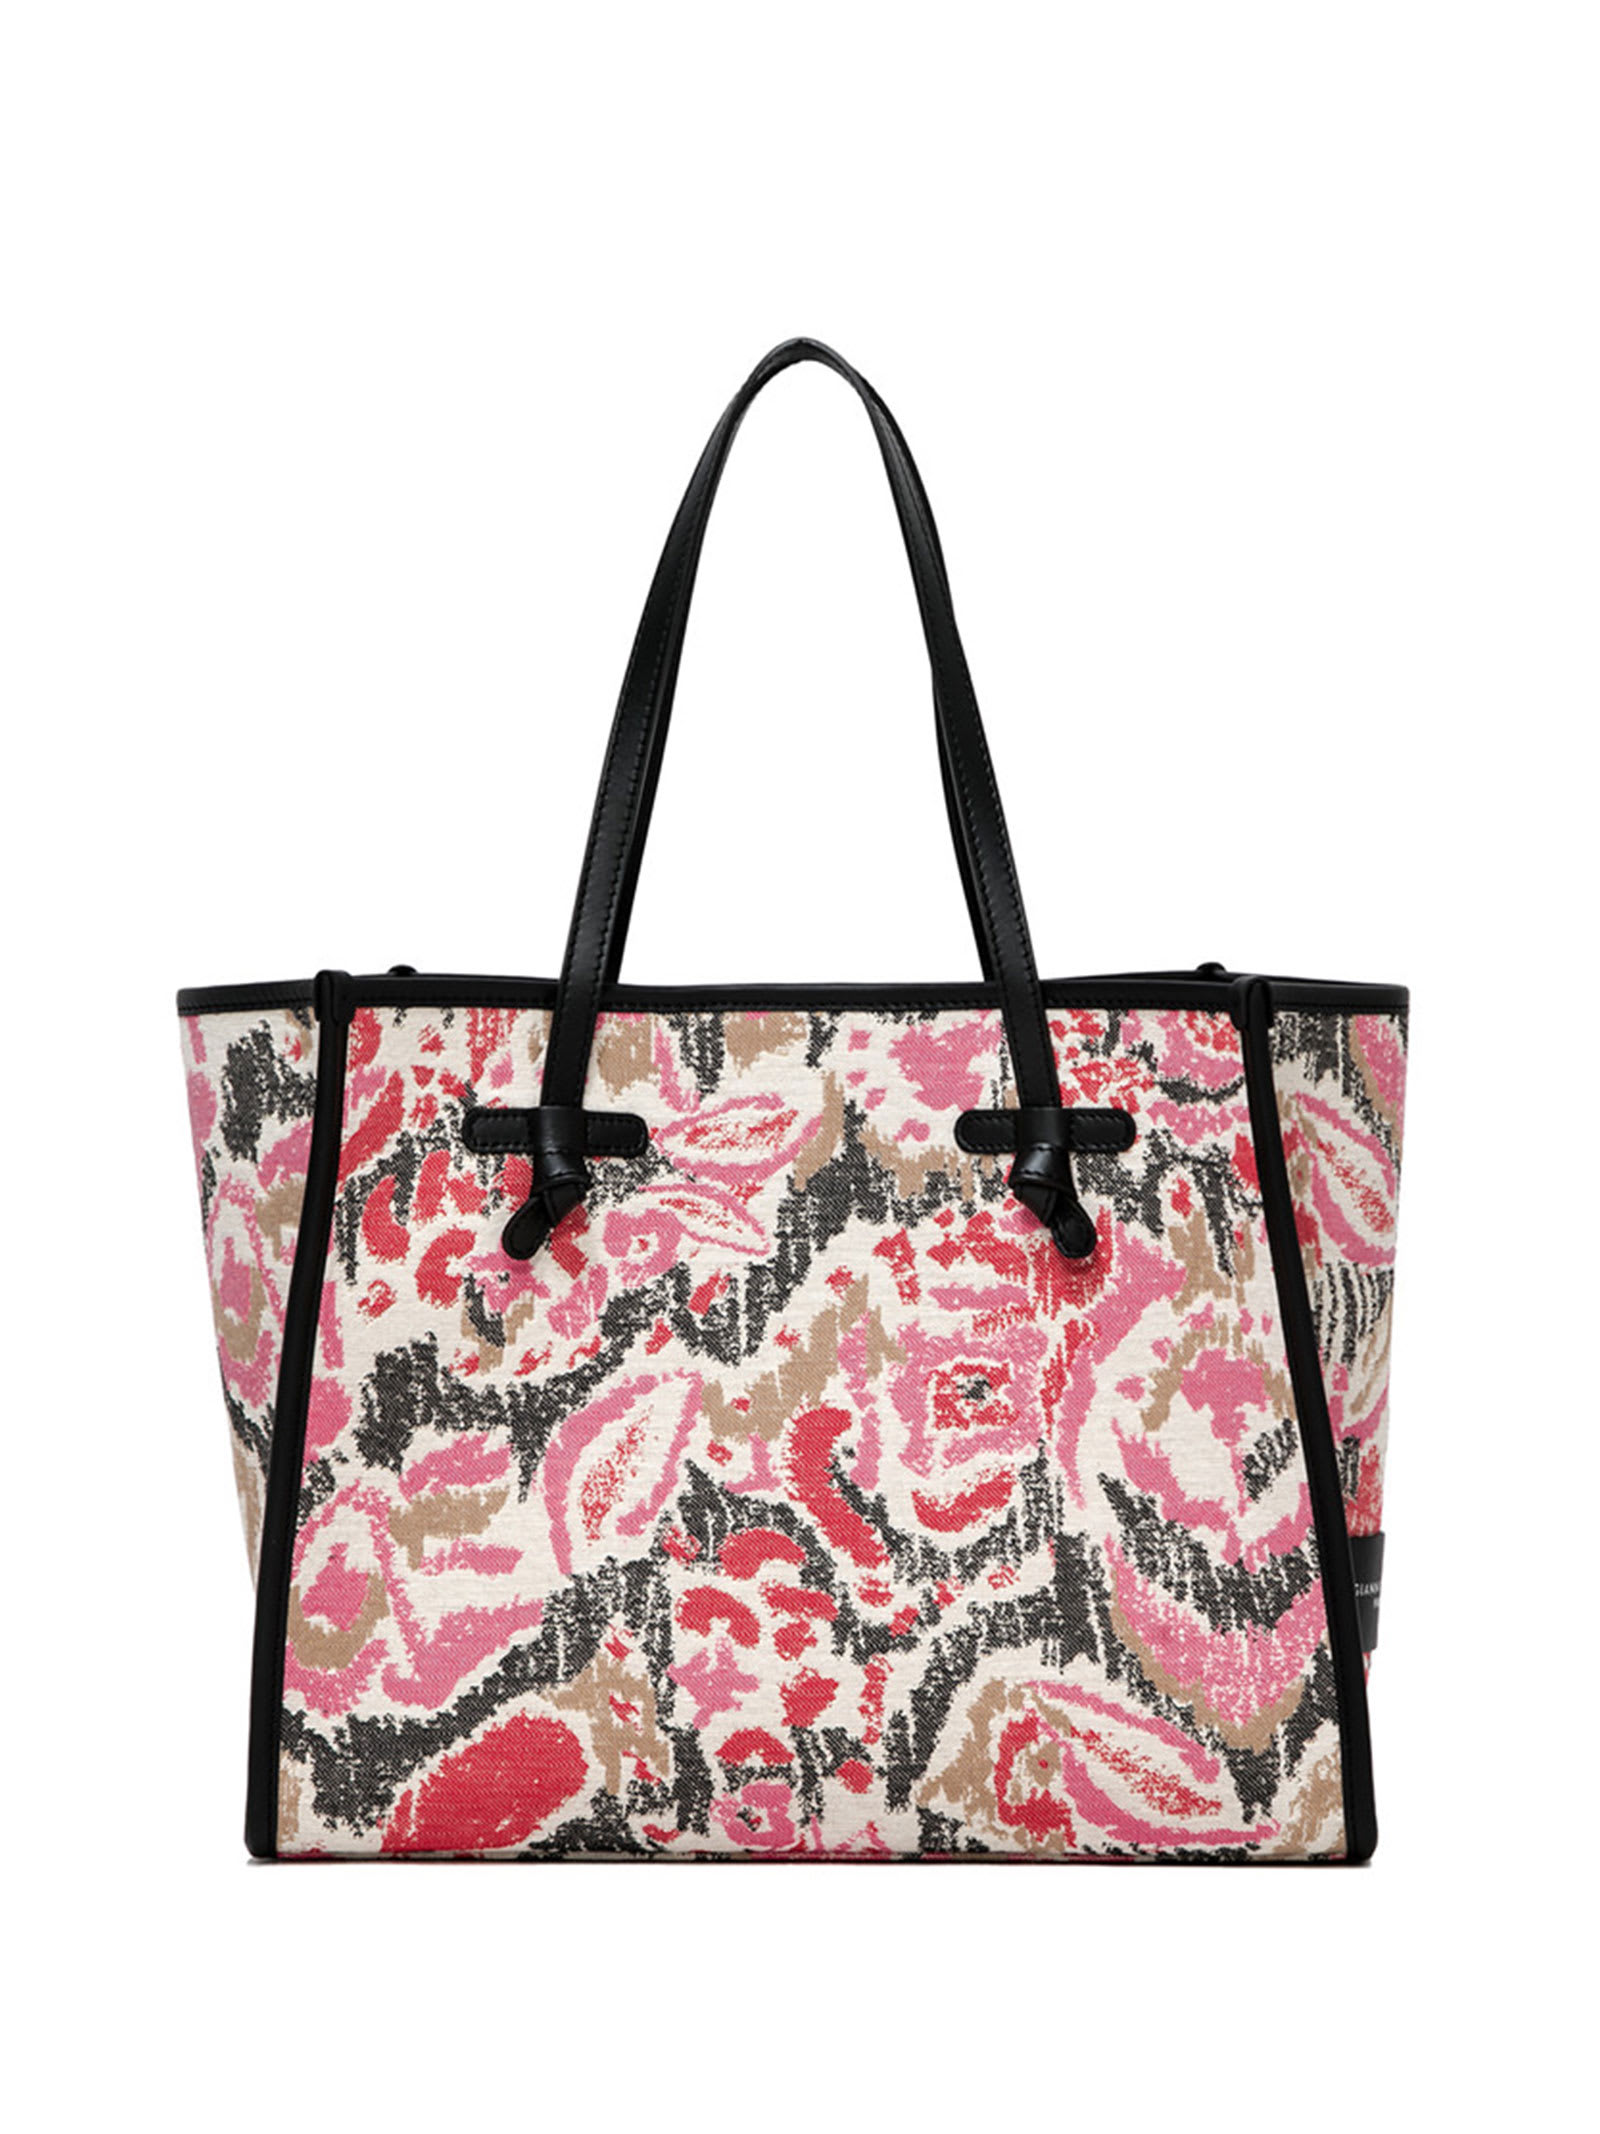 Gianni Chiarini Multicolored Shopping Bag